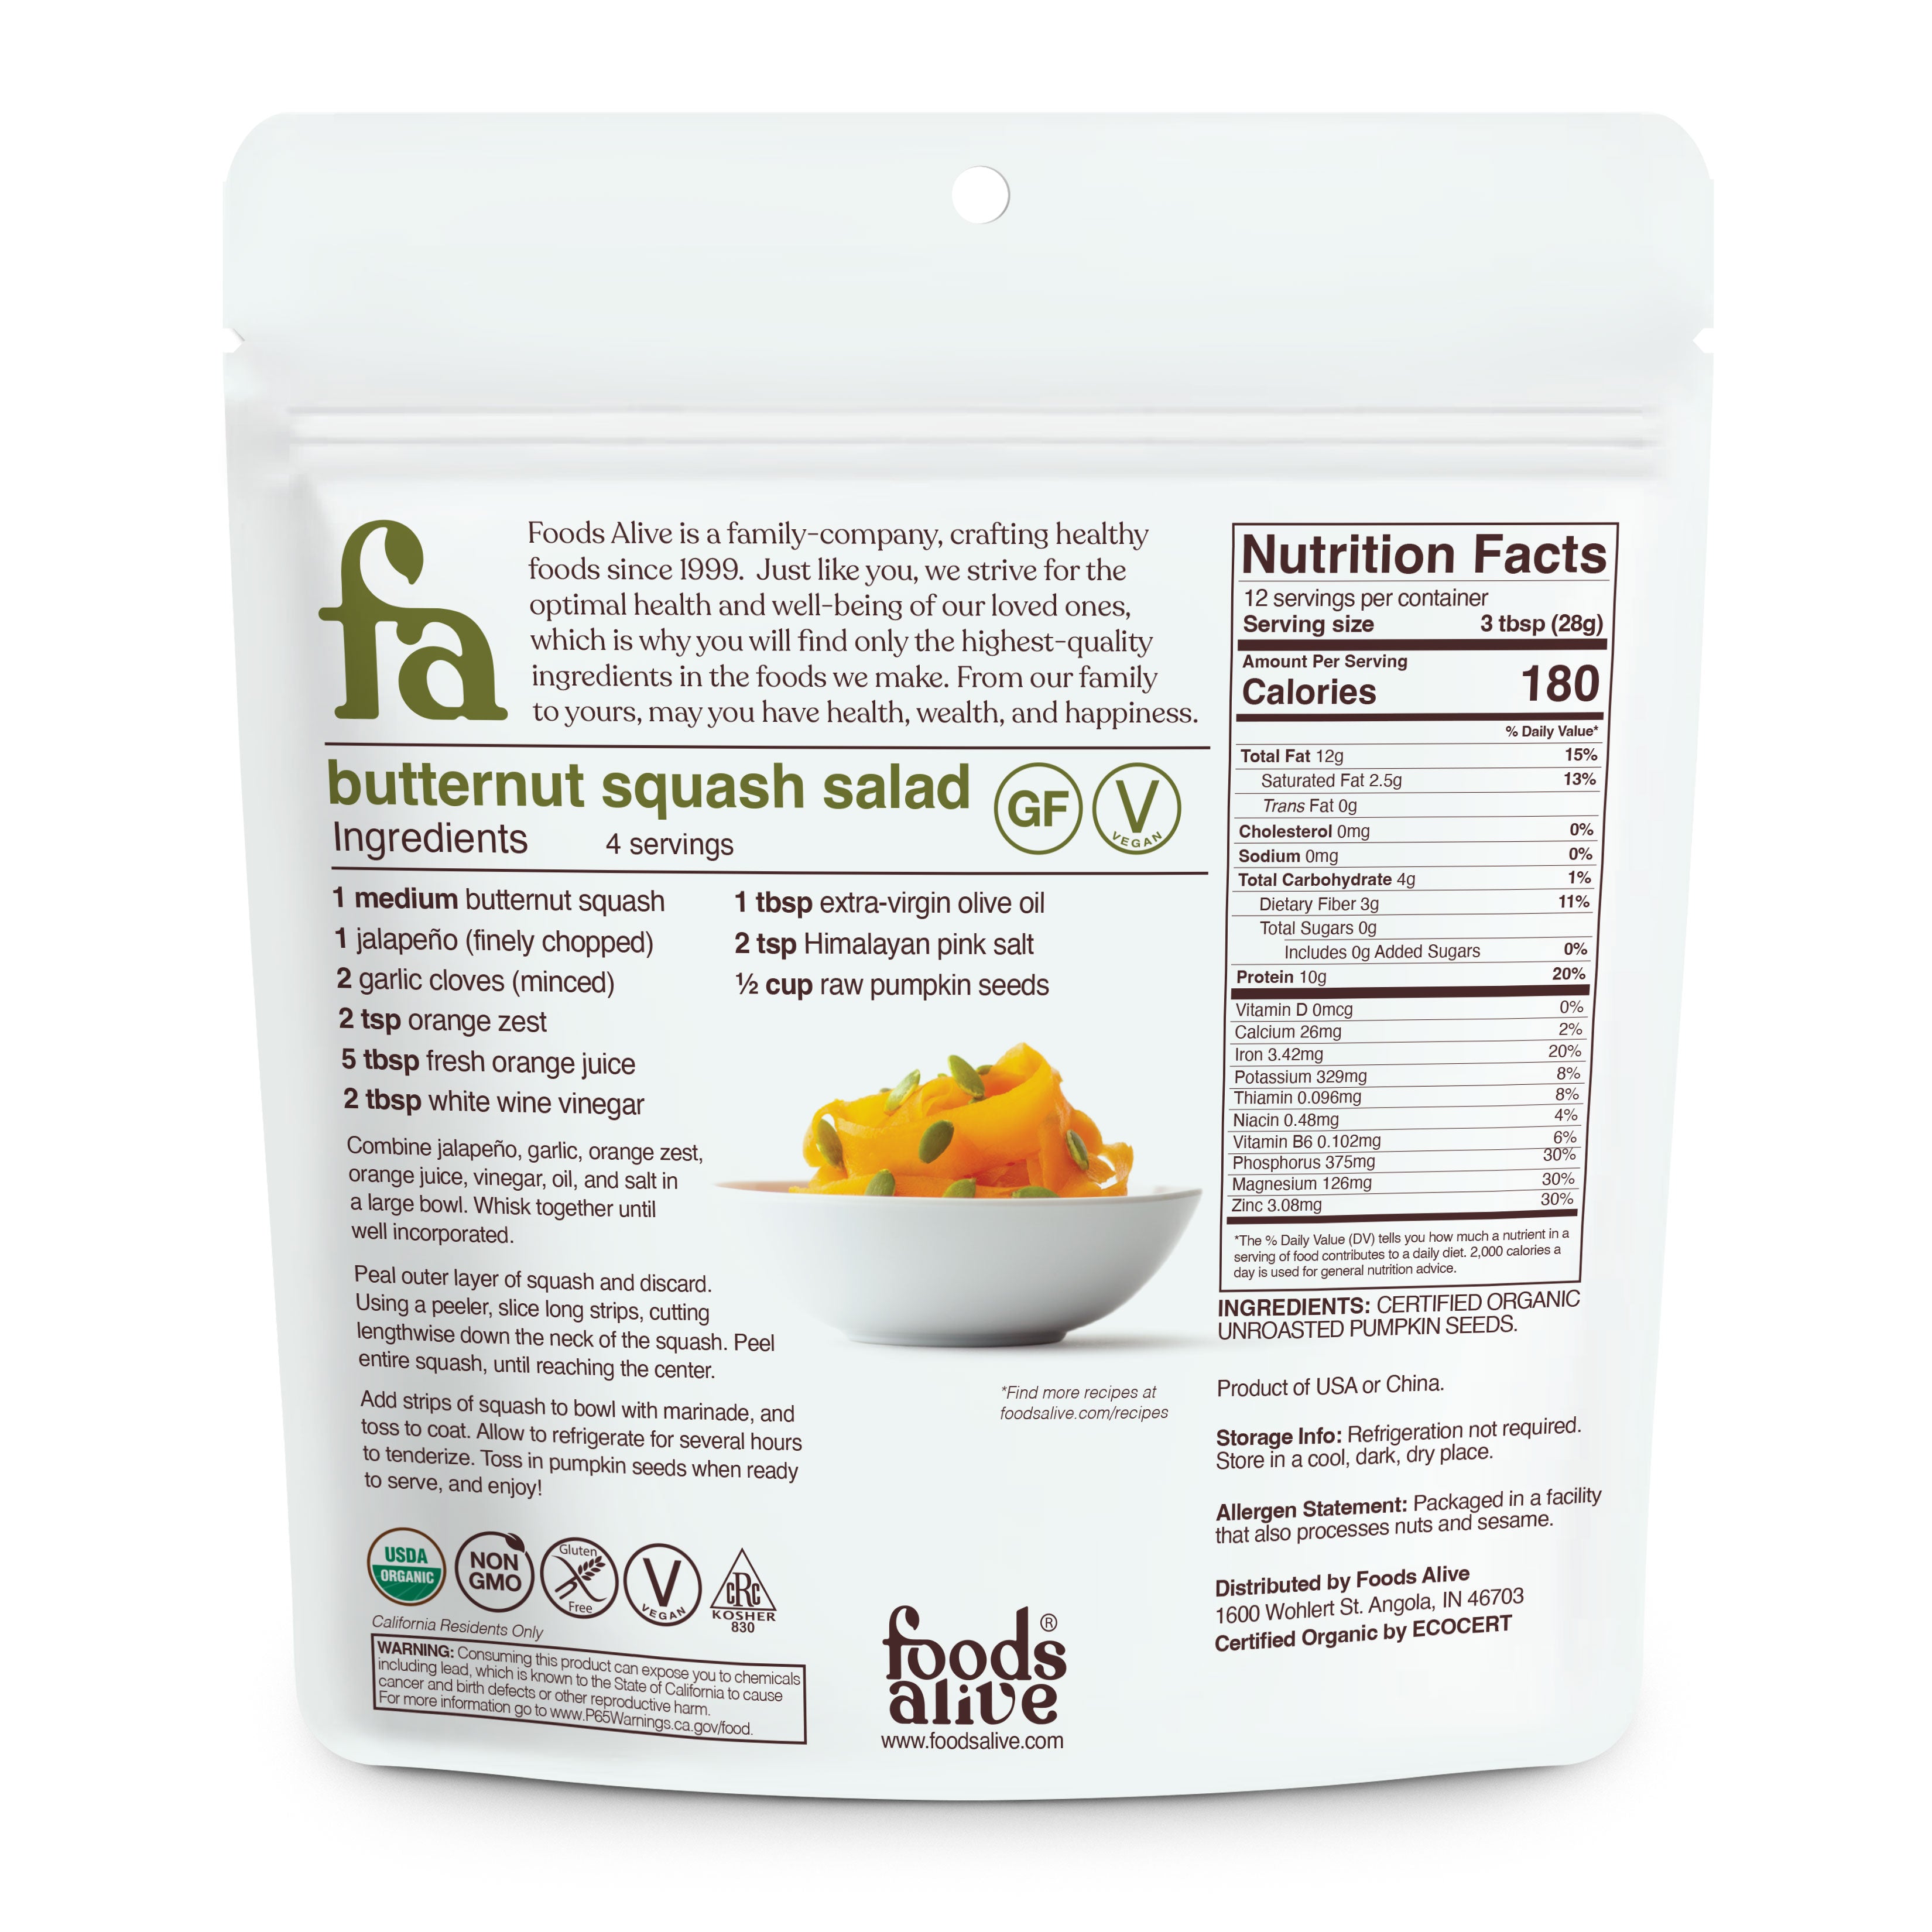 Organic Pumpkin Seeds - 12oz - Front - Foods Alive